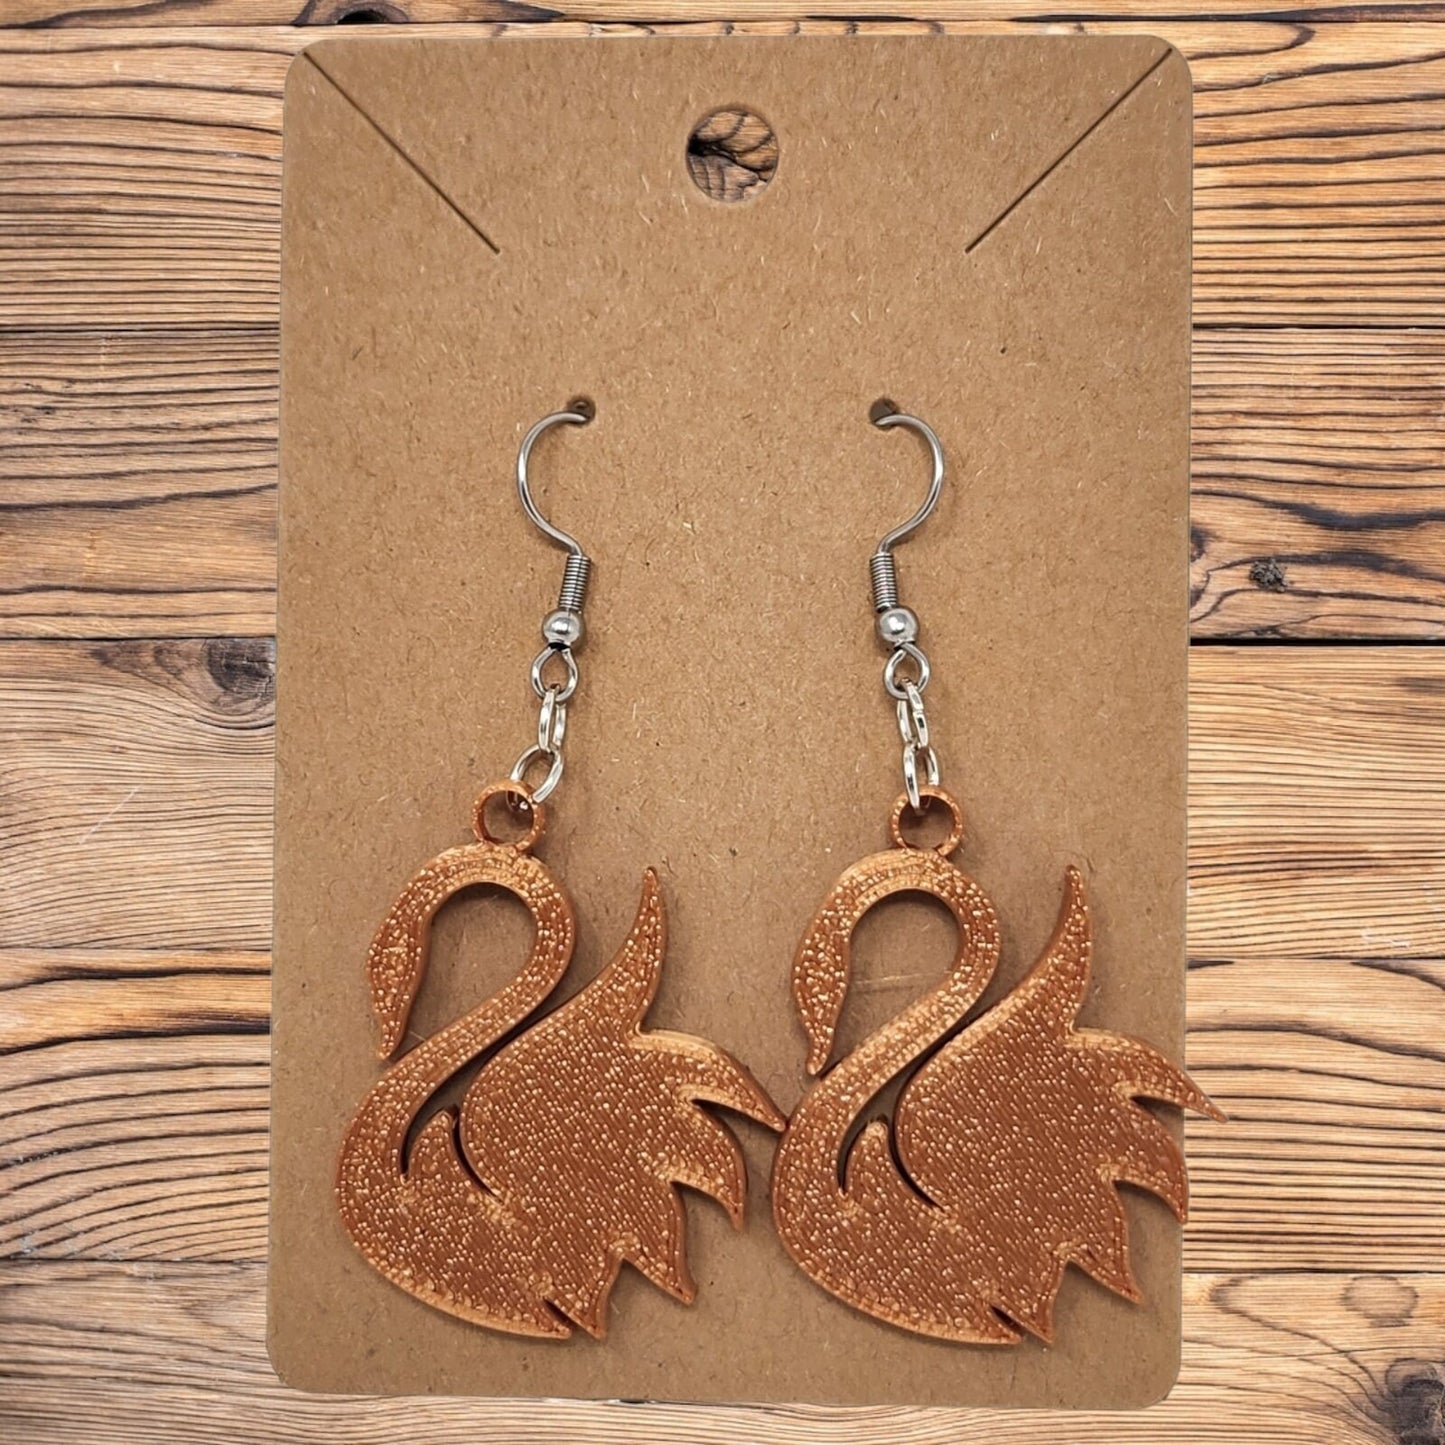 3D Printed Swan Dangle Drop Earrings - Graceful Hook Jewelry for Elegant Style